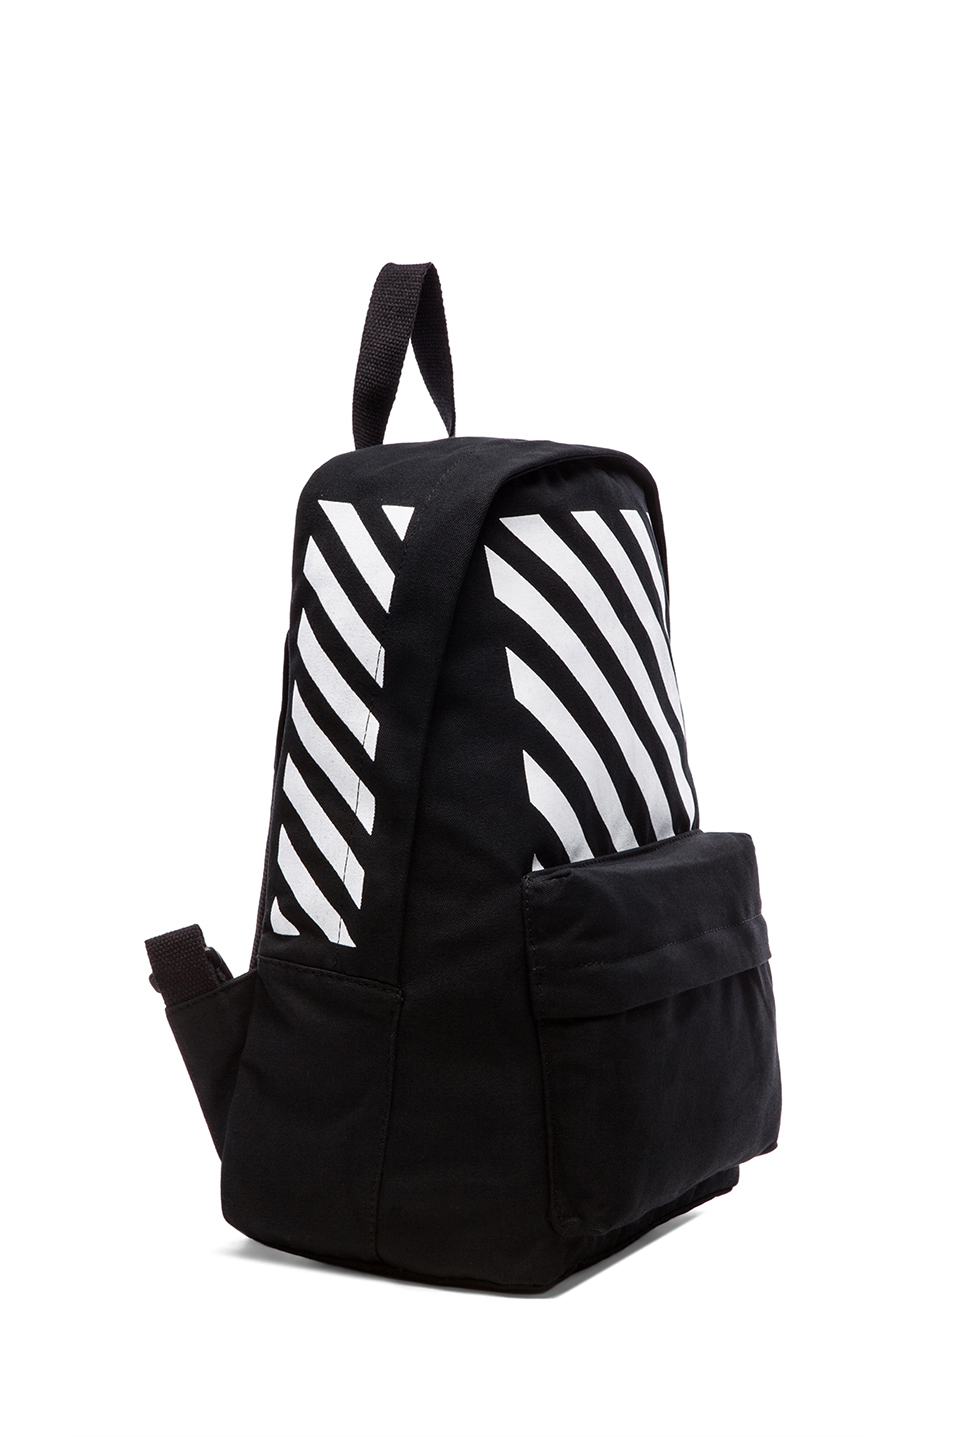 Lyst - Off-White C/O Virgil Abloh Mens Backpack in Black